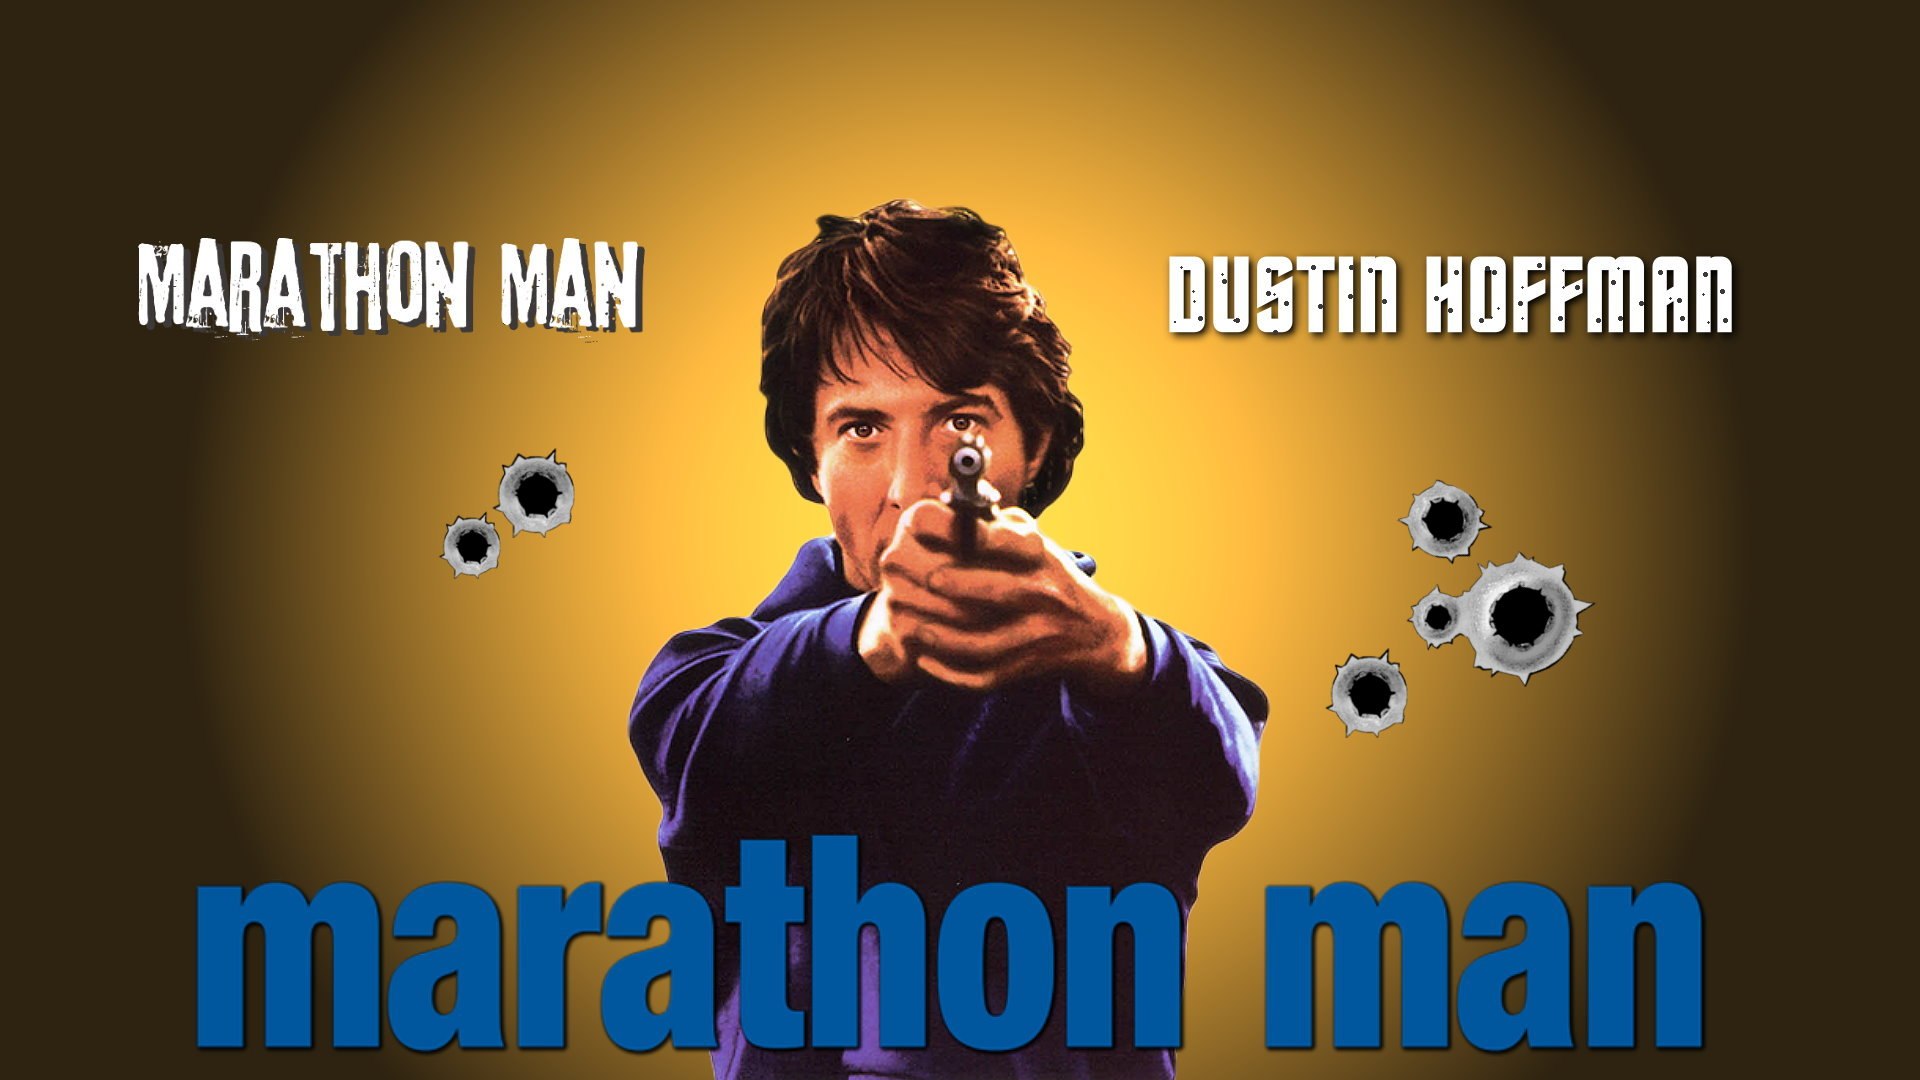 35-facts-about-the-movie-marathon-man